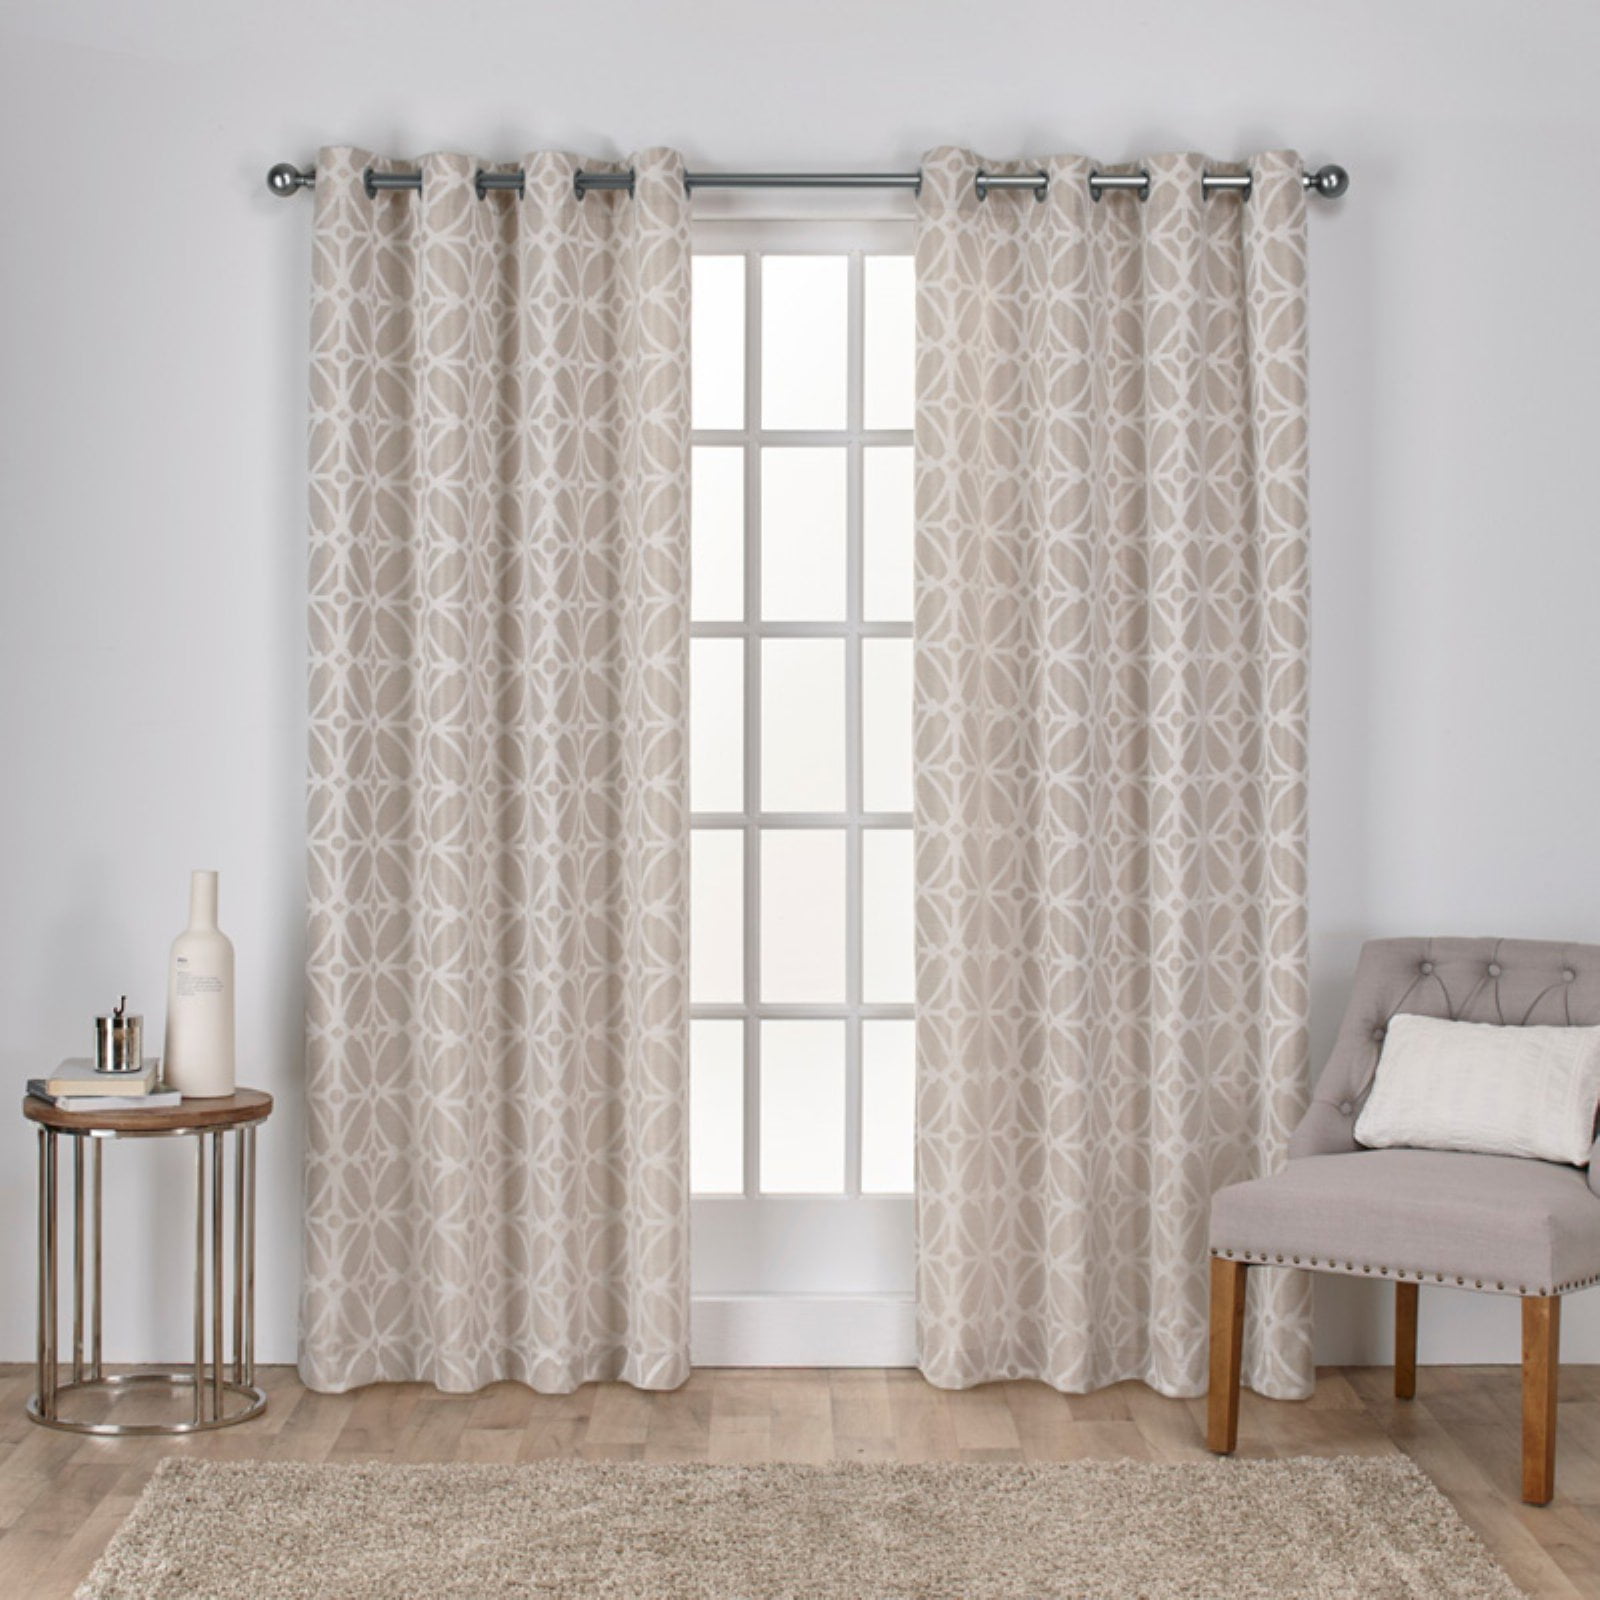 2pc EXCLUSIVE HOME Geometric Linen Jacquard Curtain PanelsDove Gray54"x96" 